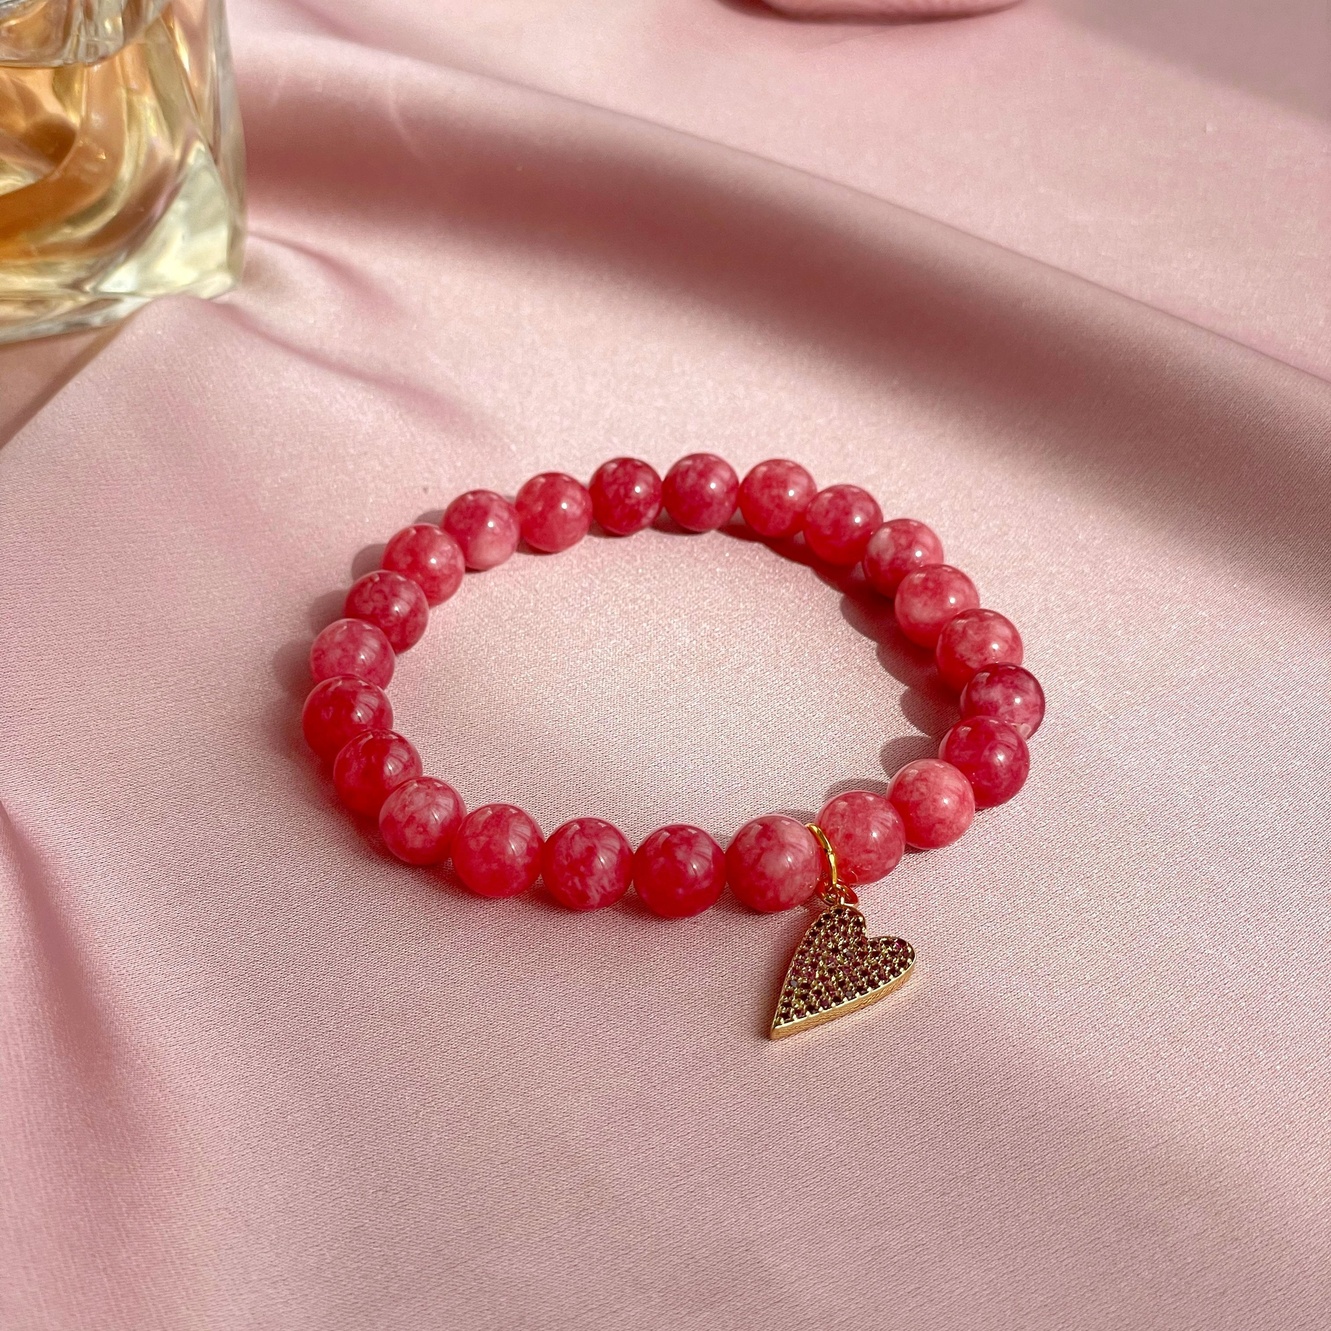 Bracelet naturel boule pierre naturelle en jade rose